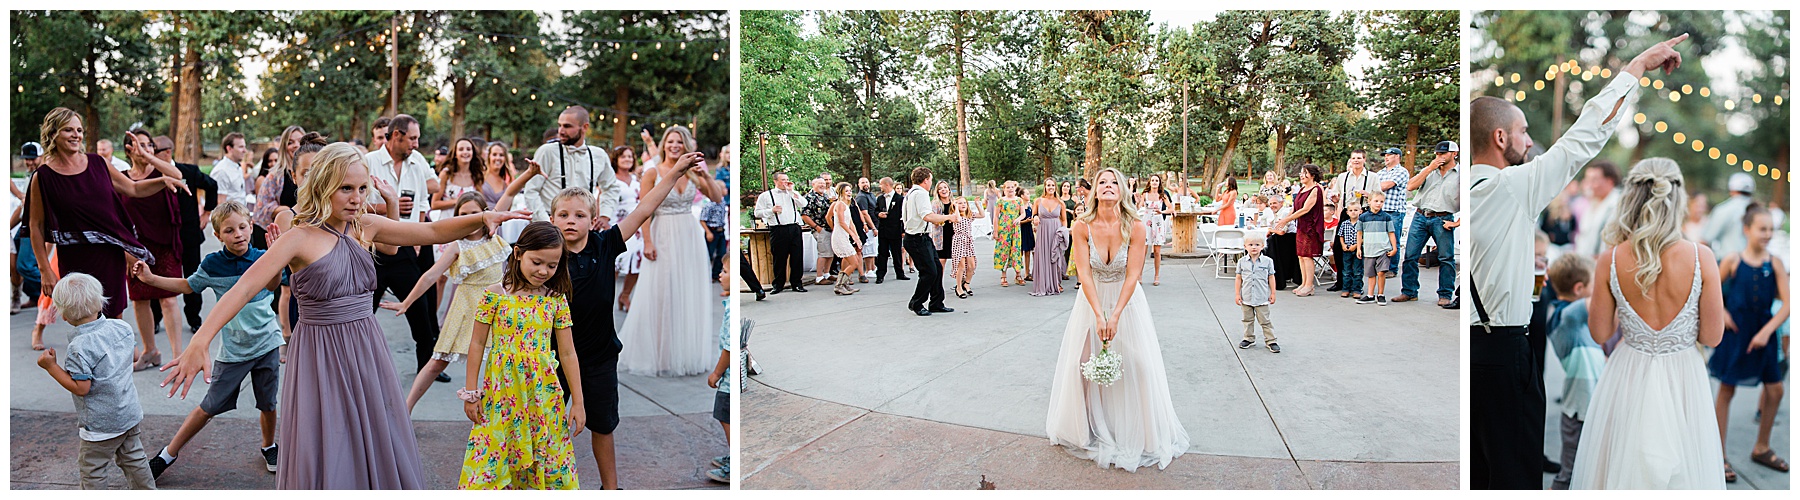 The wedding party hits the dancefloor in the simple yet intimate Bend, Oregon backyard wedding